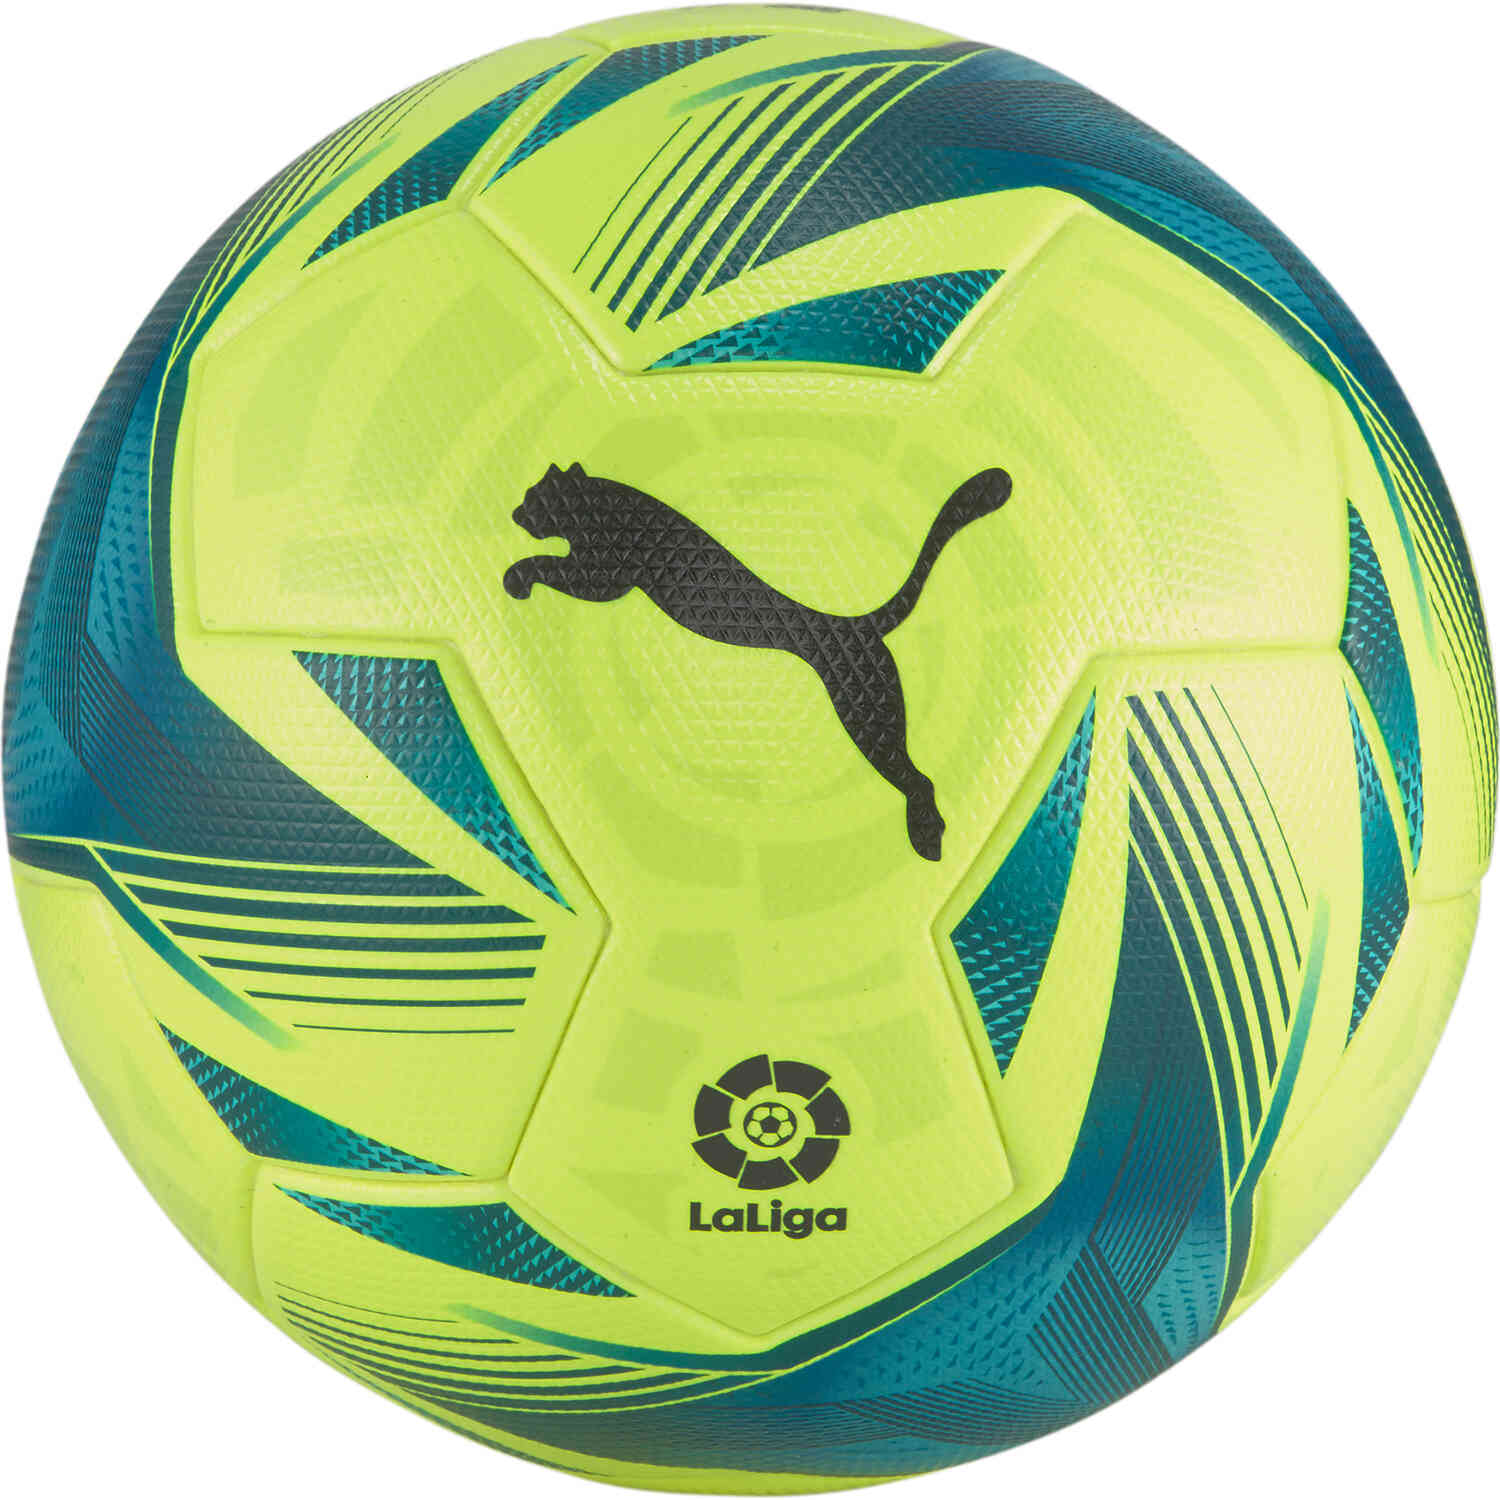 PUMA La Liga 1 Adrenalina Official Soccer Ball - Tonic - Master